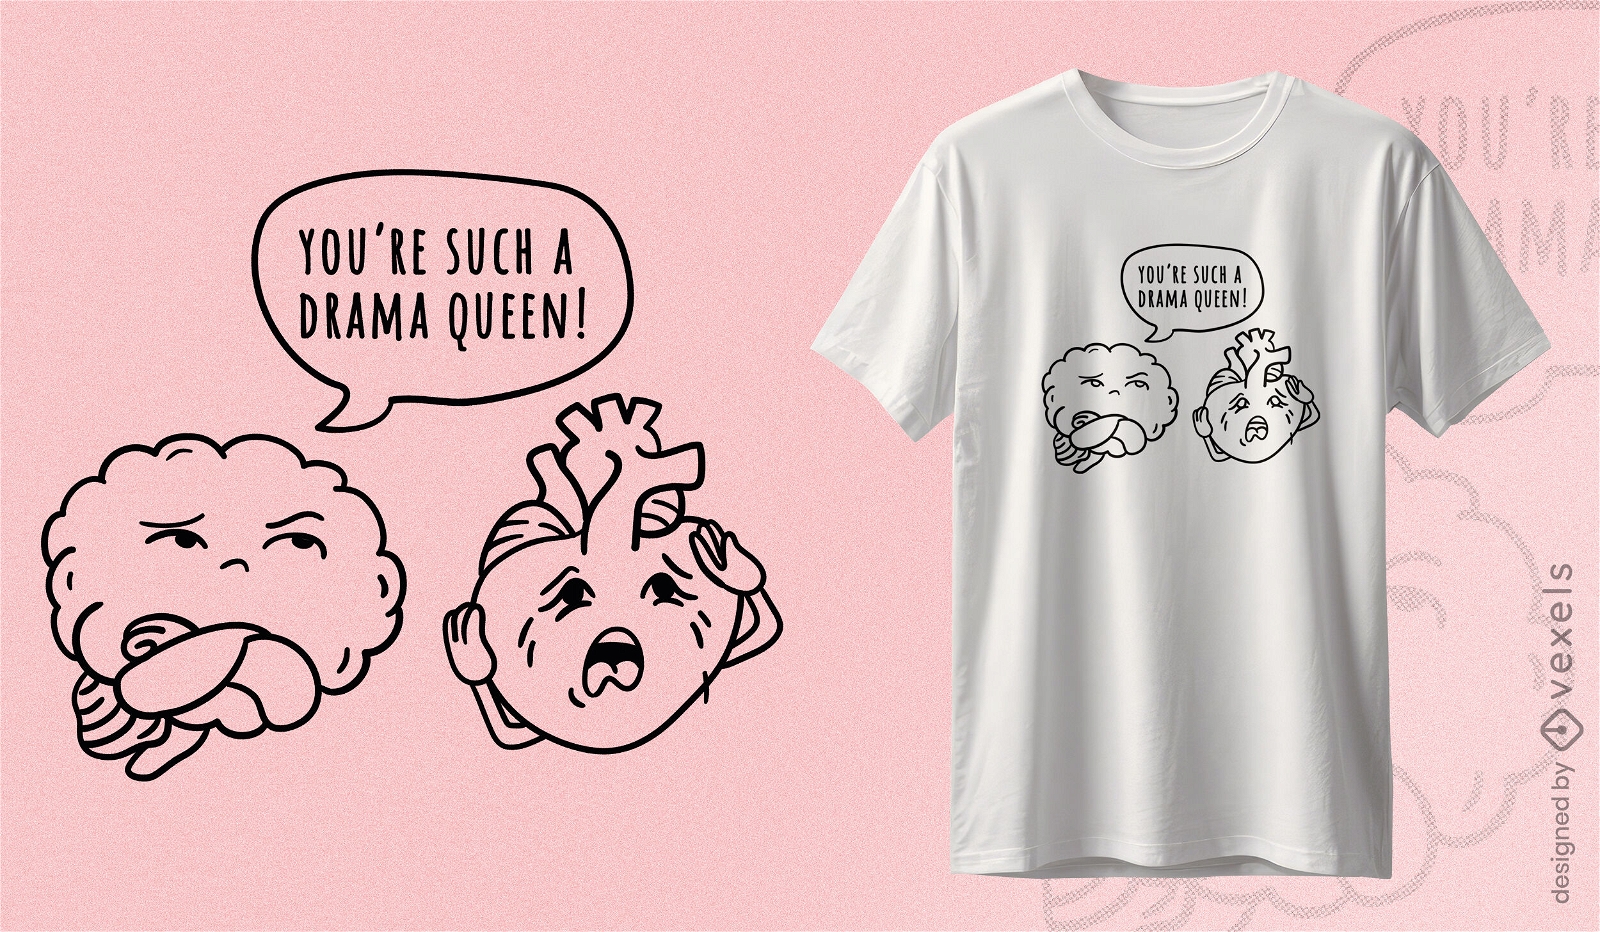 Drama queen brain t-shirt design